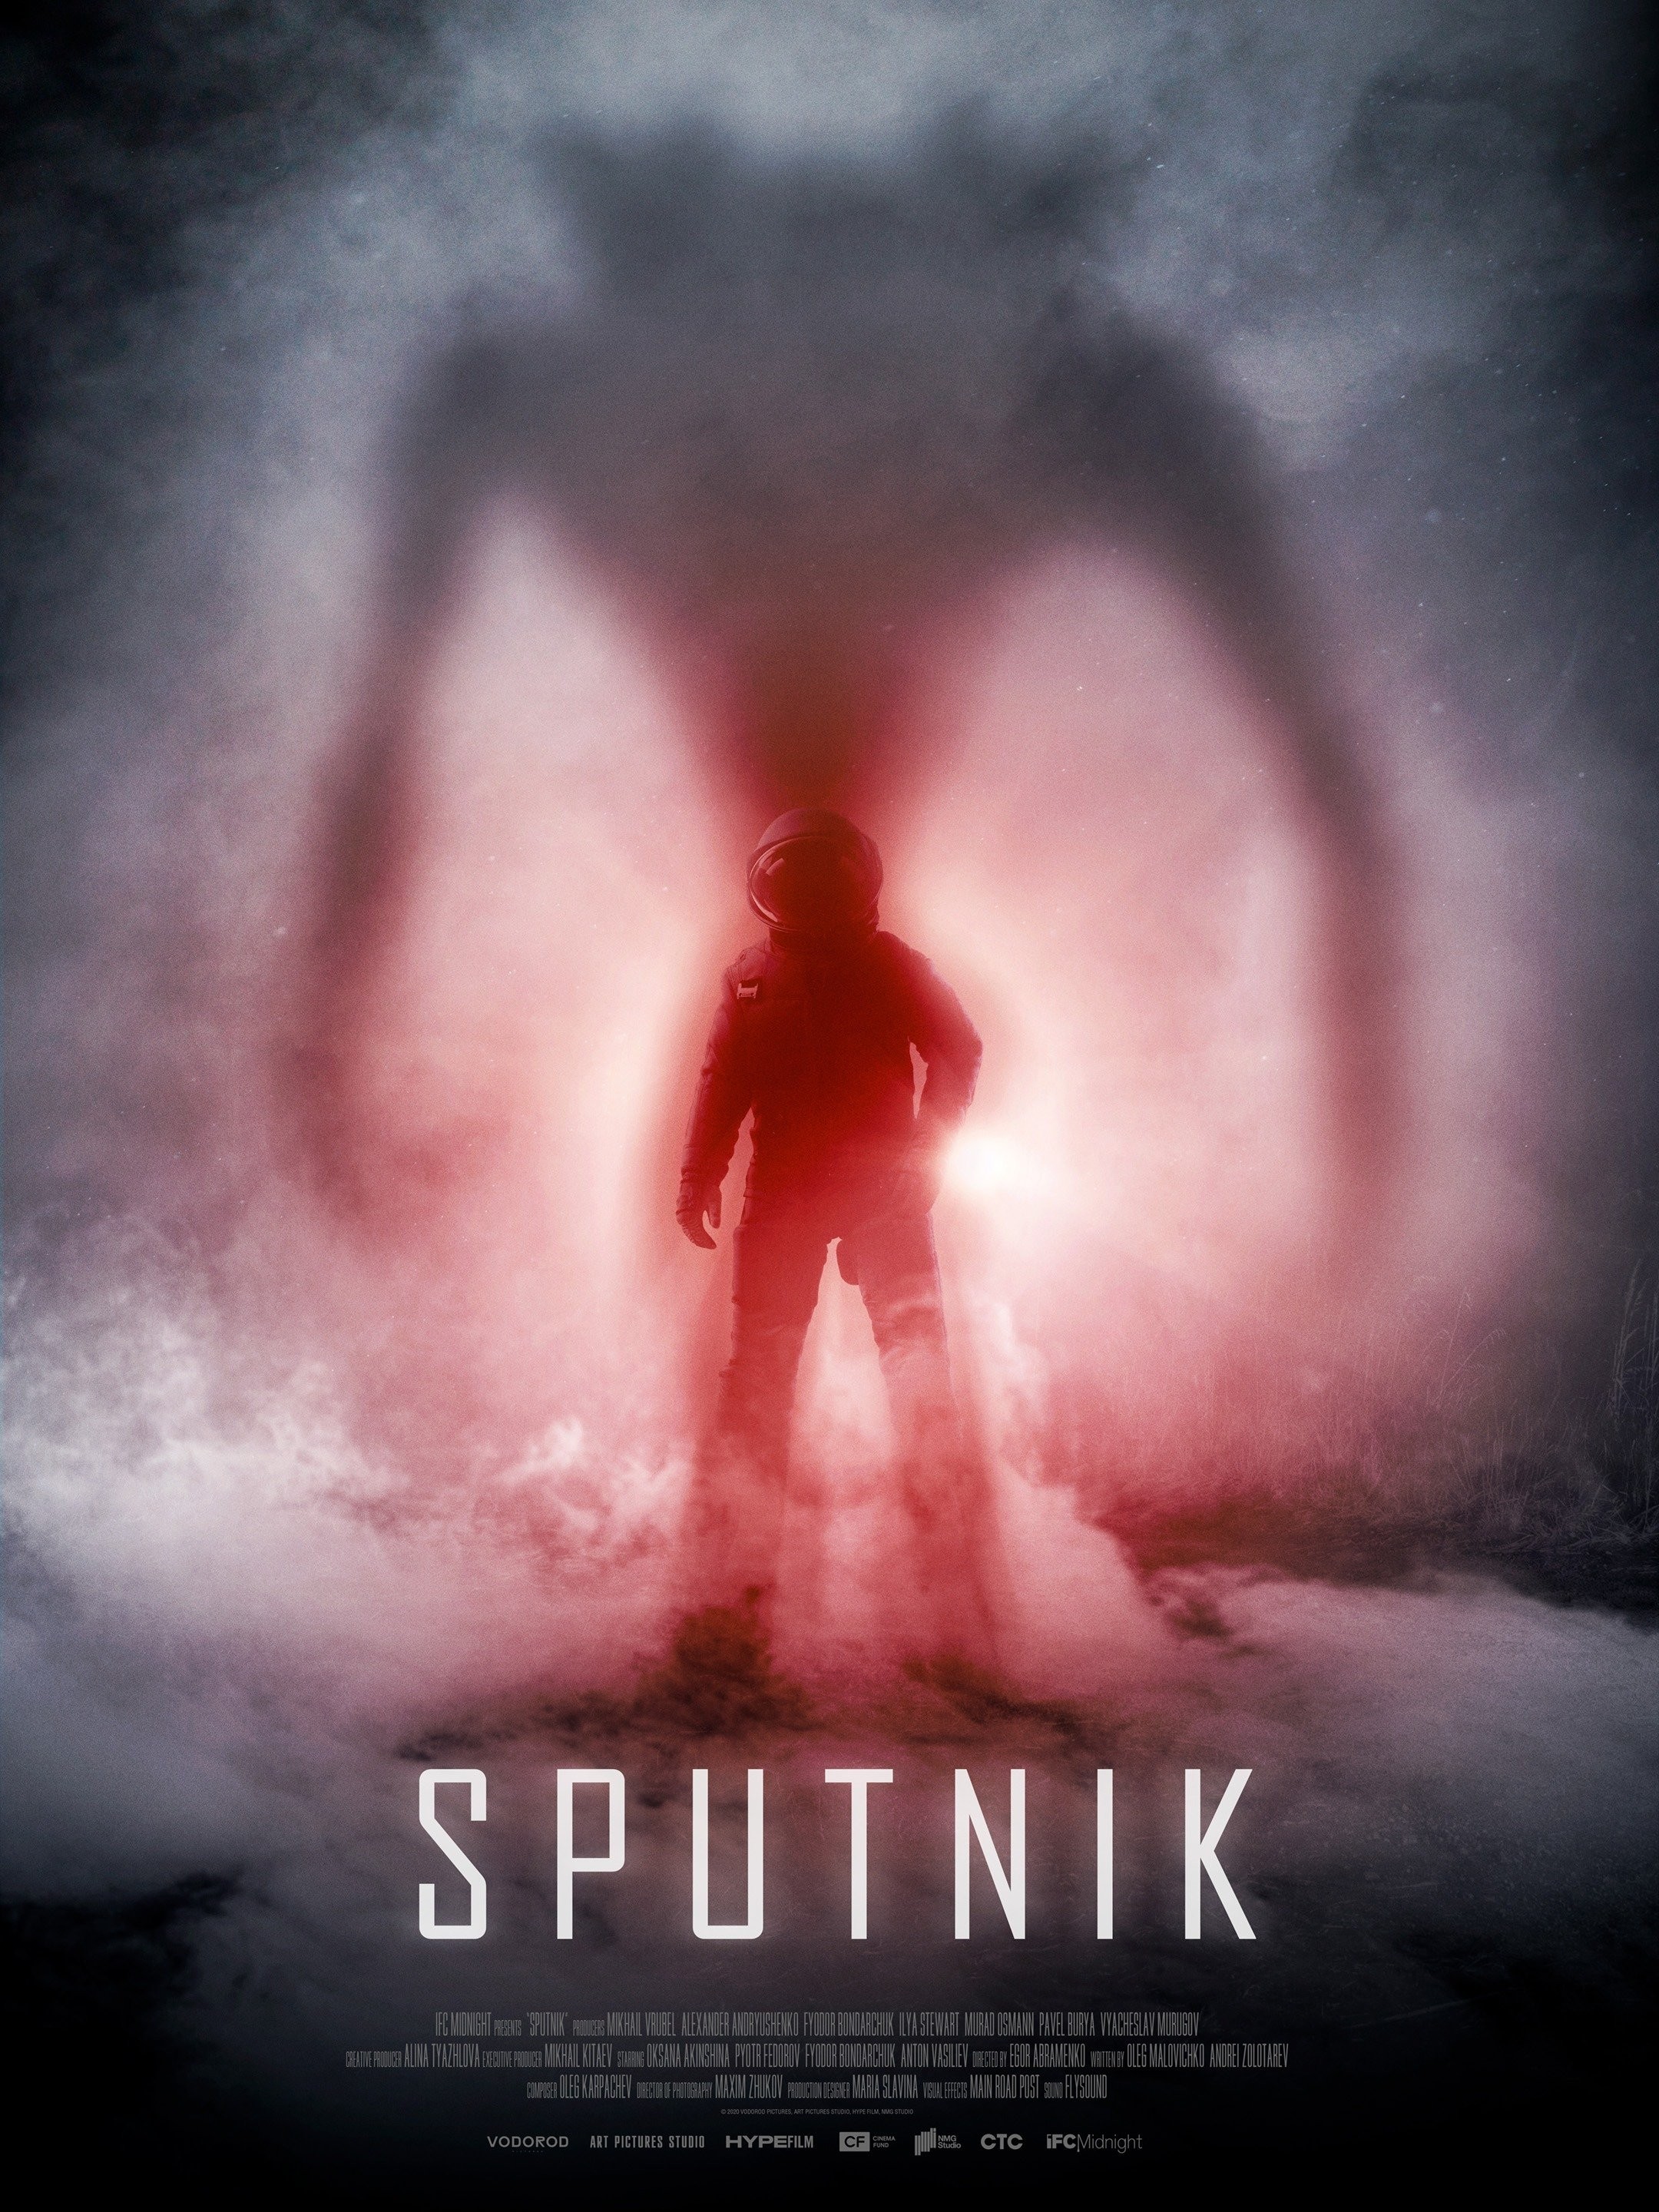 Sputnik seks - Поиск порно